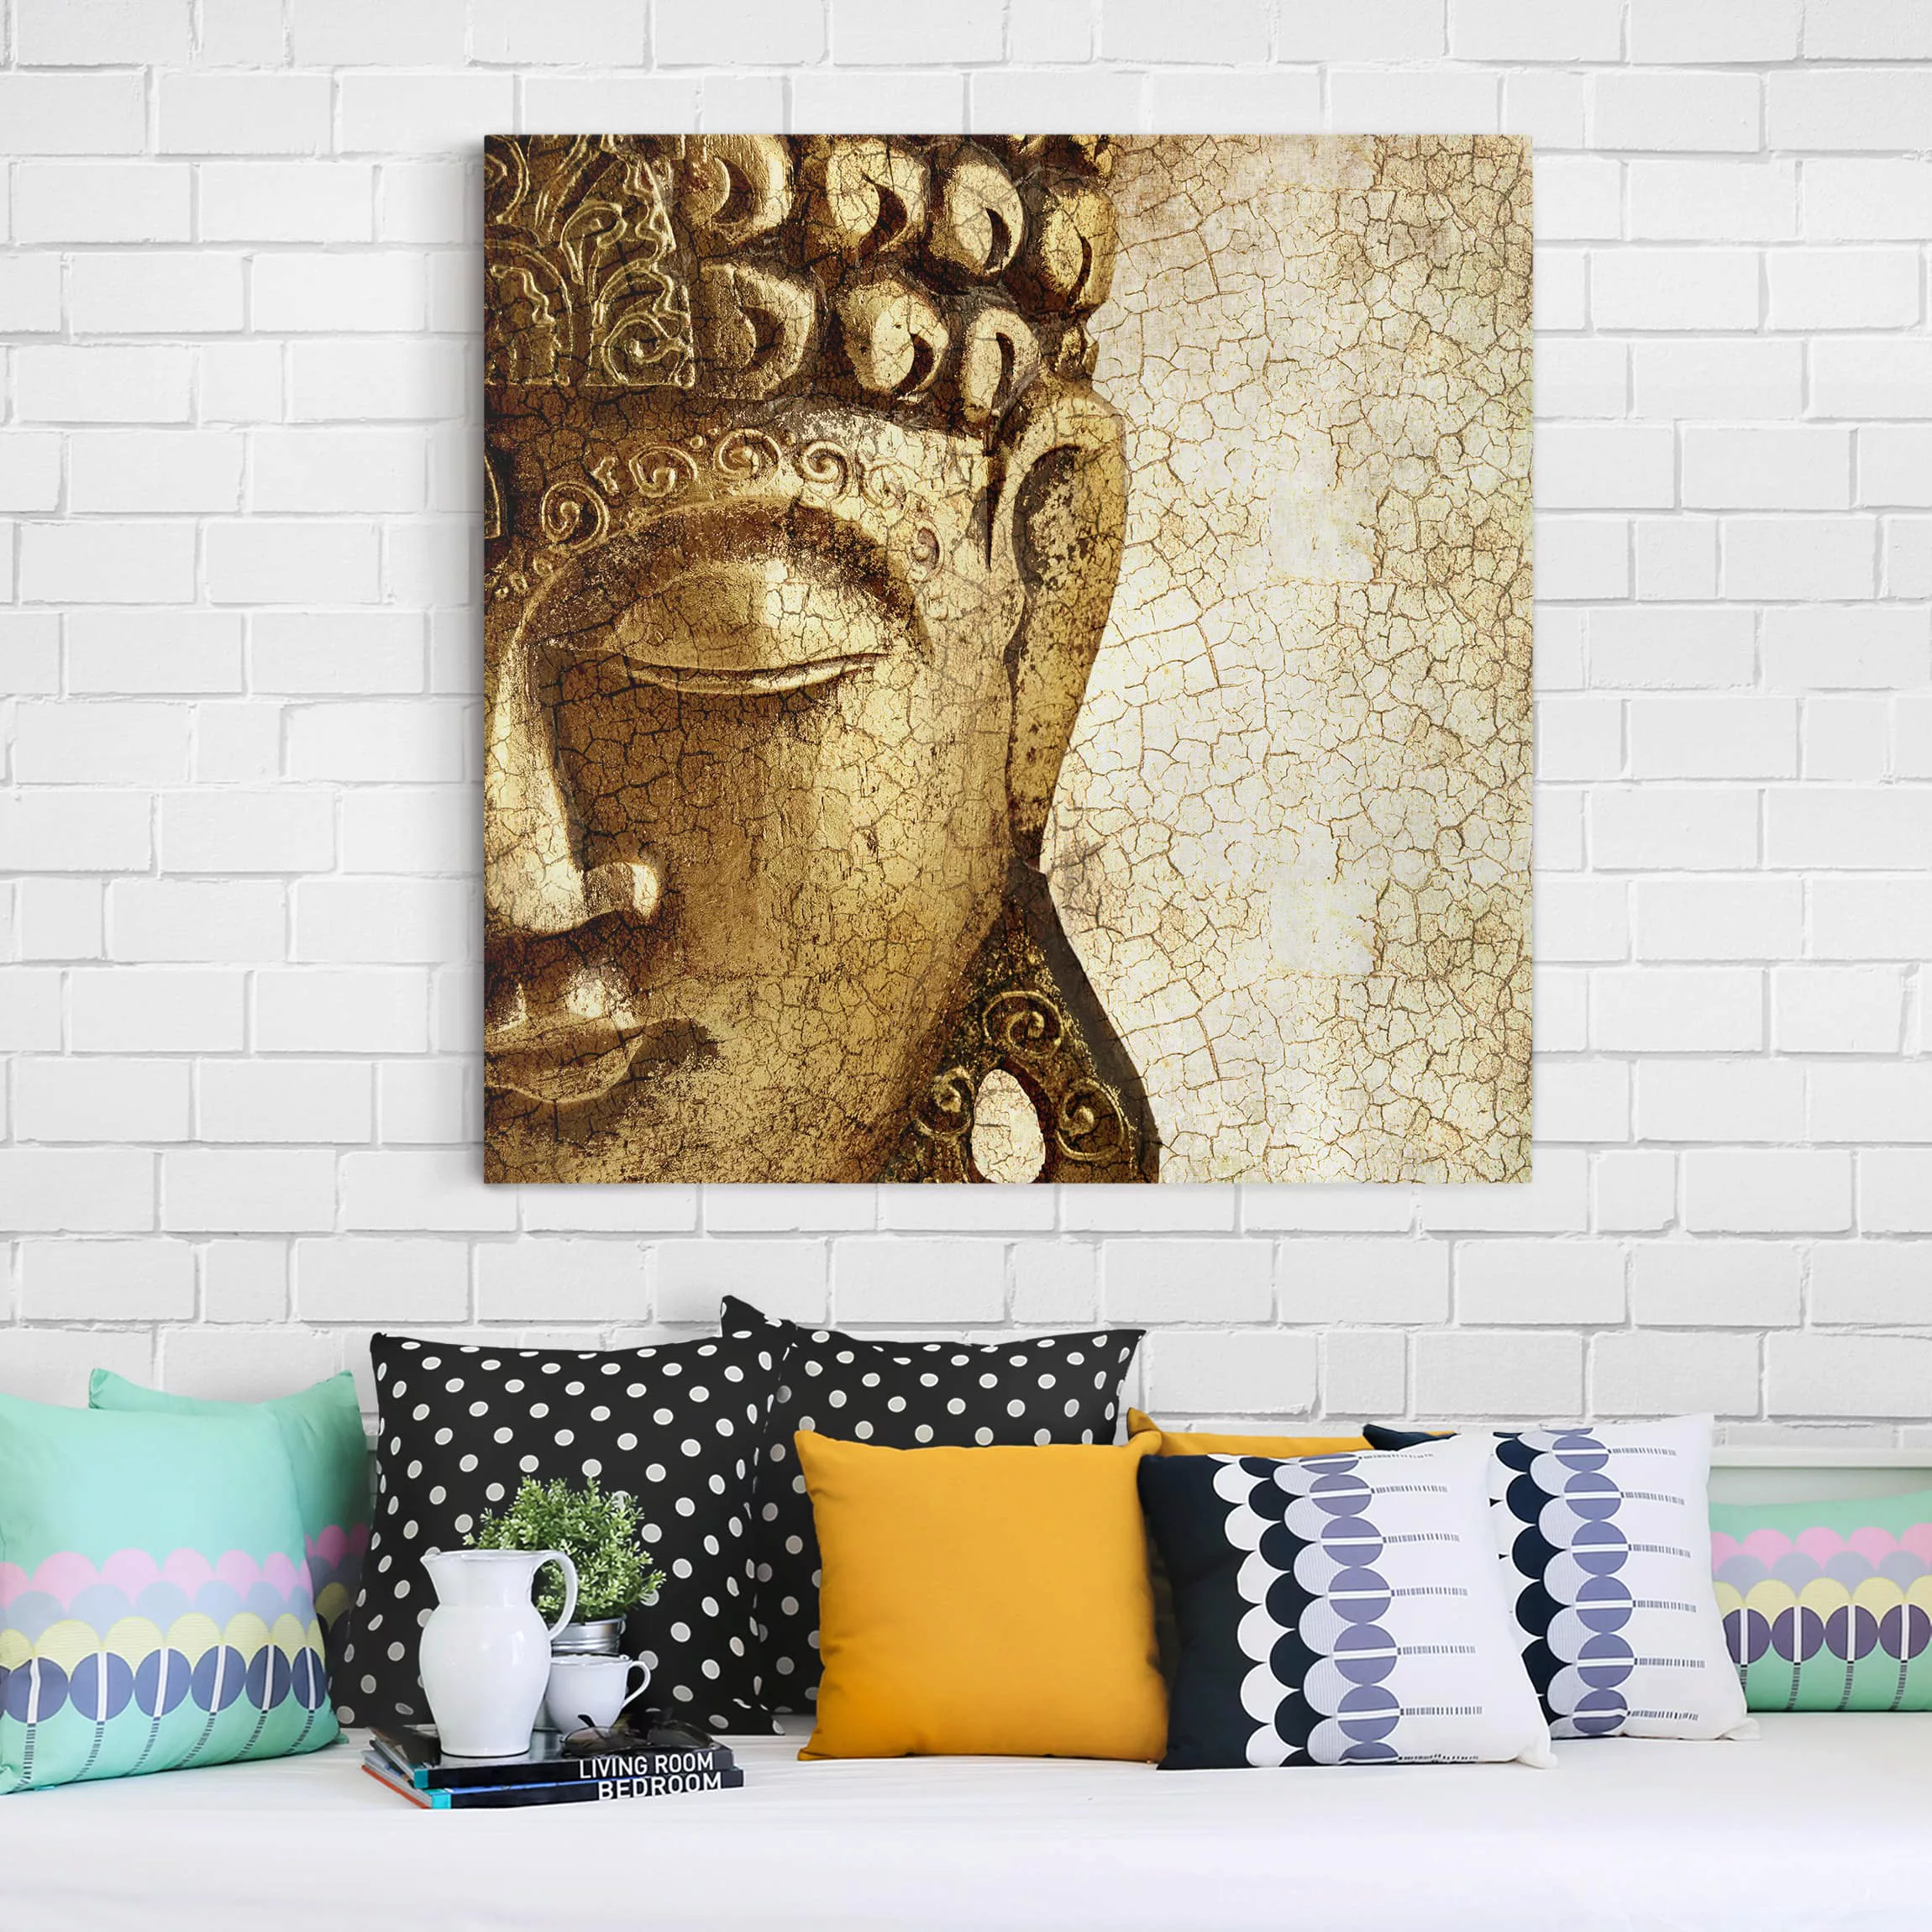 Leinwandbild Buddha - Quadrat Vintage Buddha günstig online kaufen